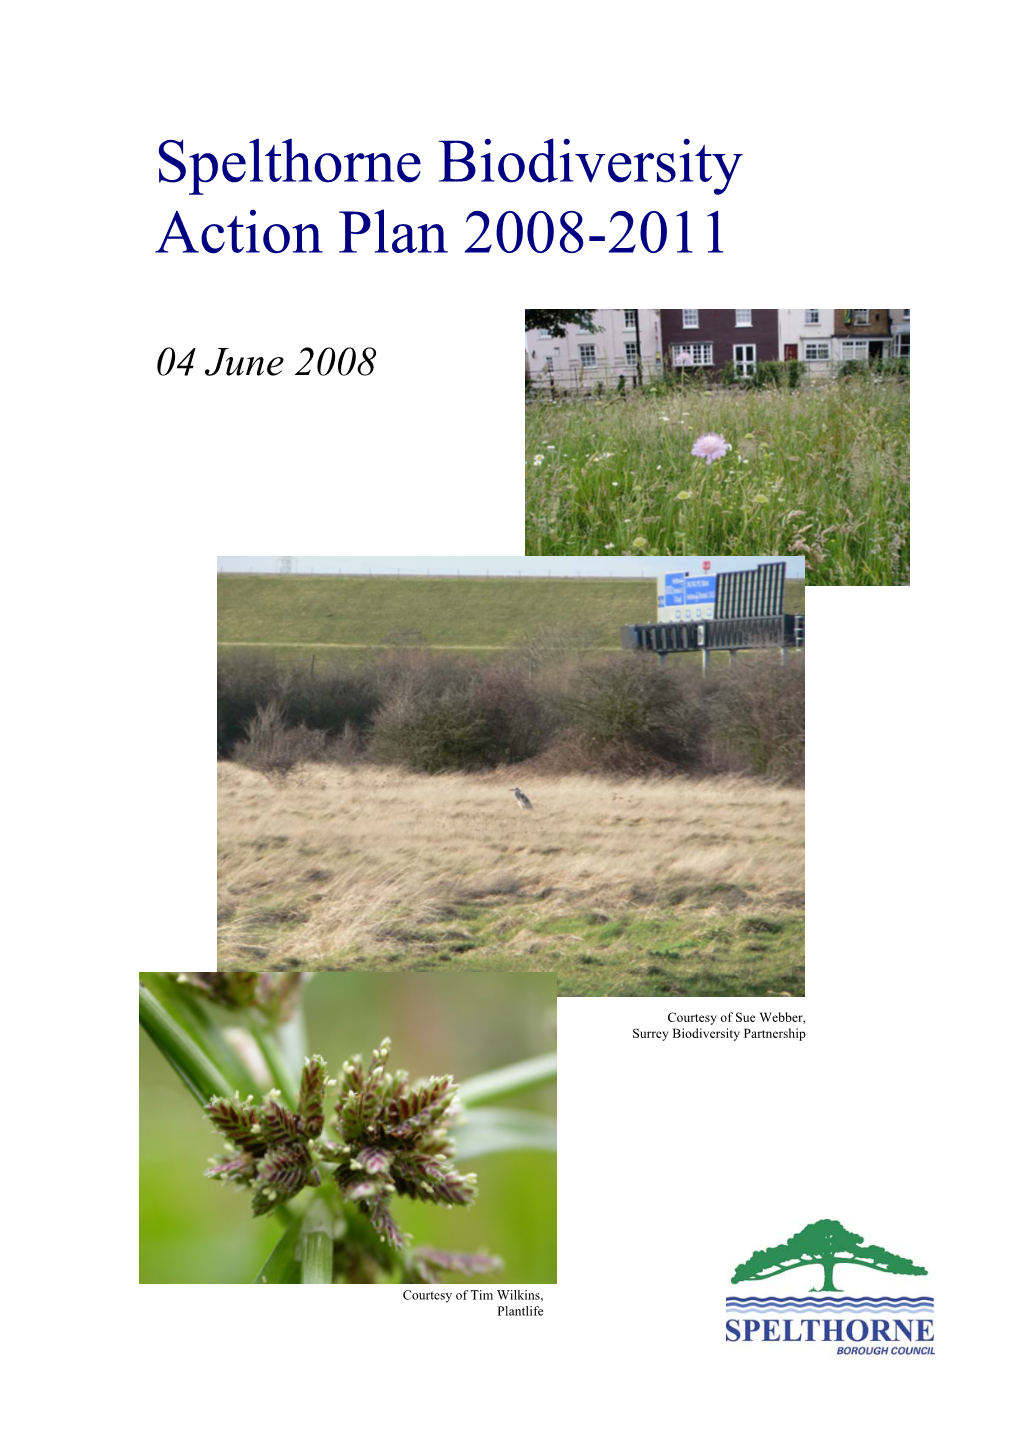 Spelthorne Biodiversity Action Plan 2008-2011